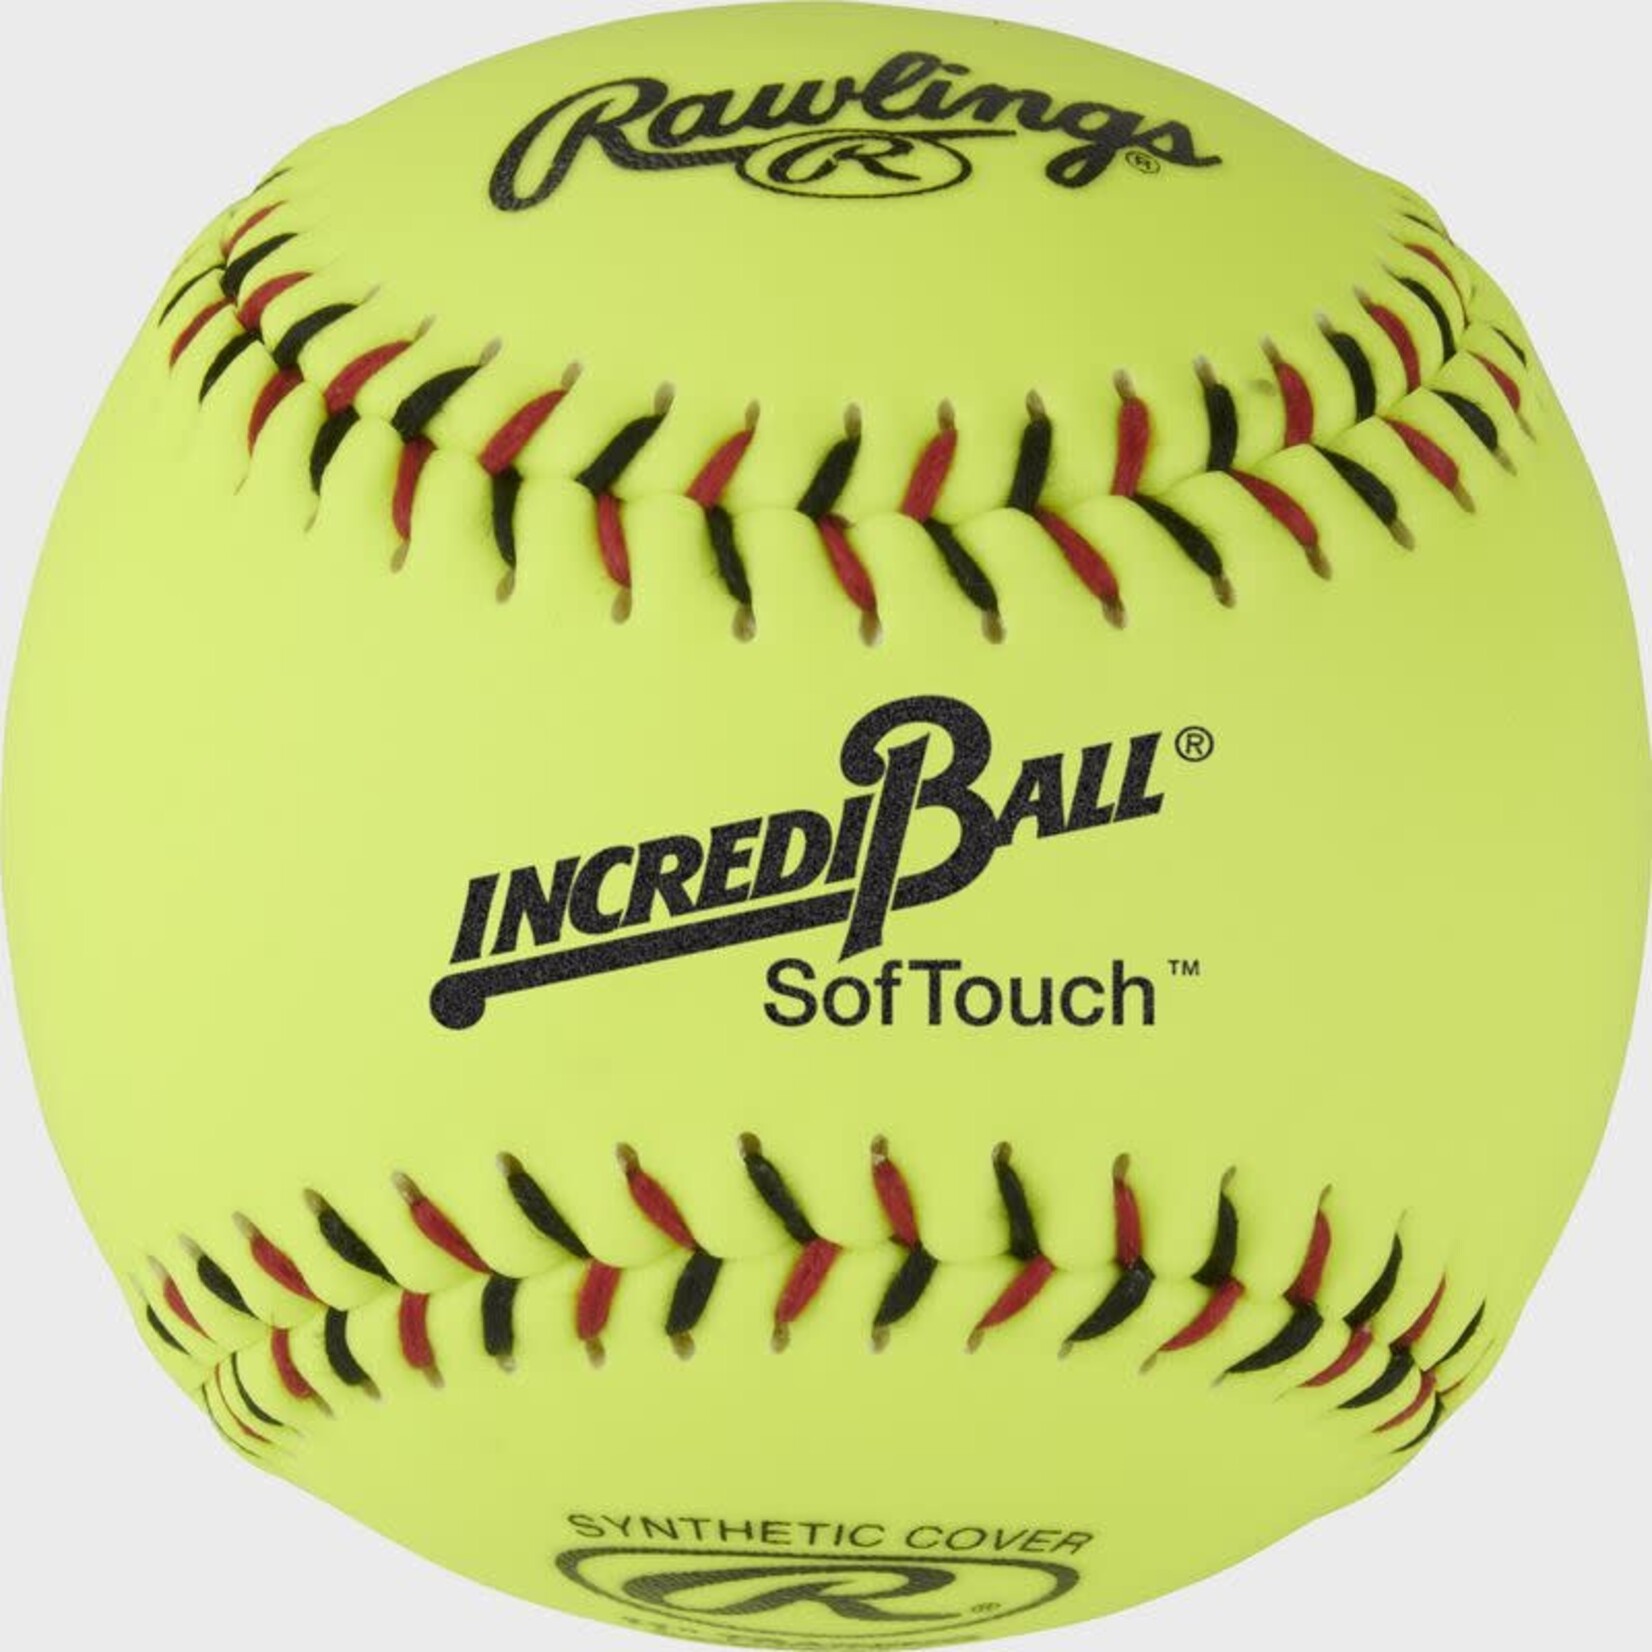 Rawlings Rawlings Training Baseball, SoftTouch Incrediball, 11", Yel, 12-Pack